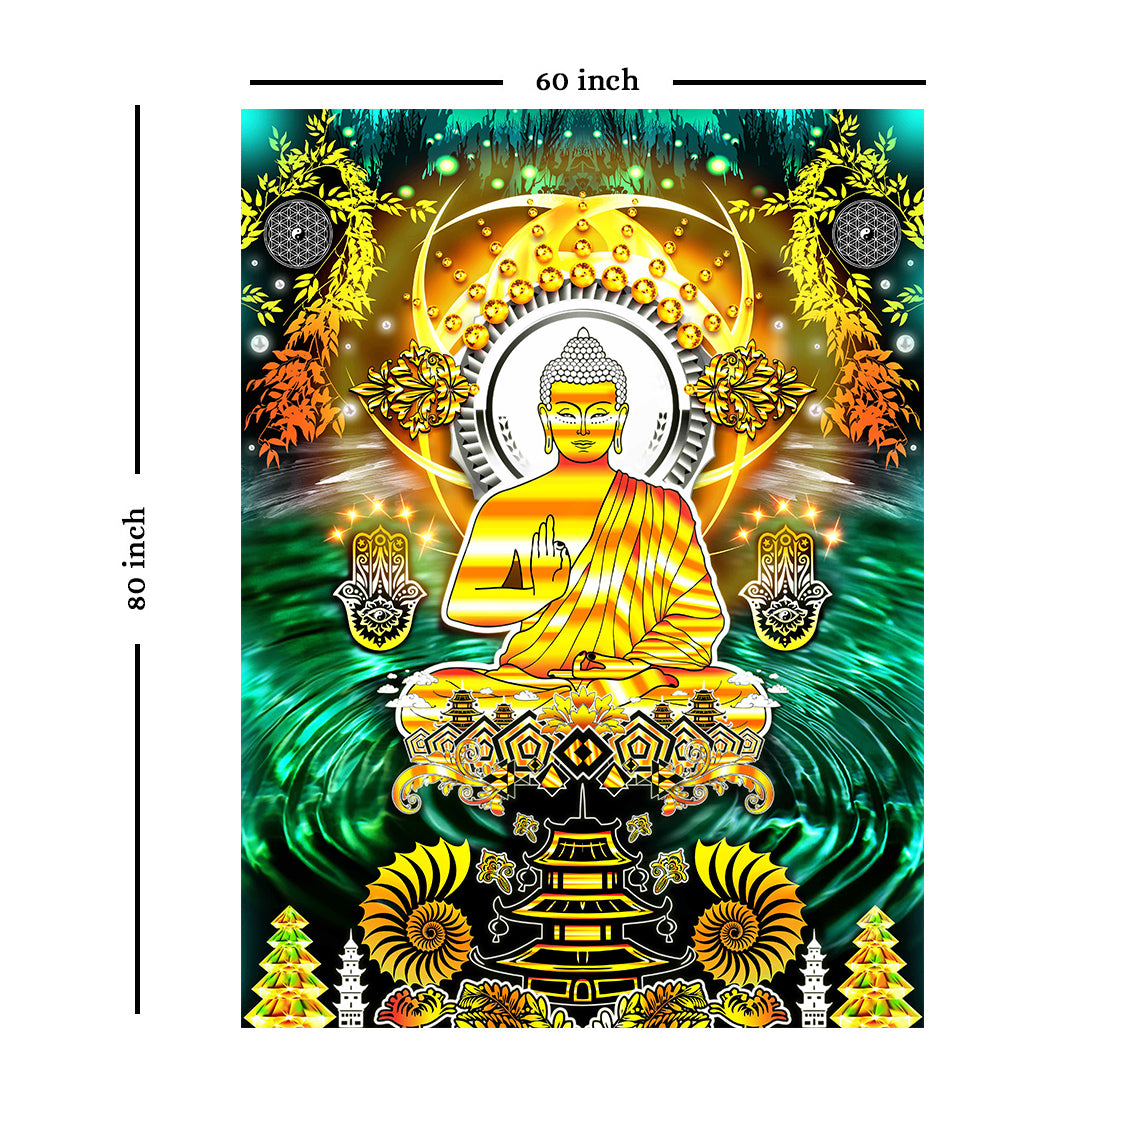 Tapisserie murale bouddha (multicolore, 80 x 60 pouces)